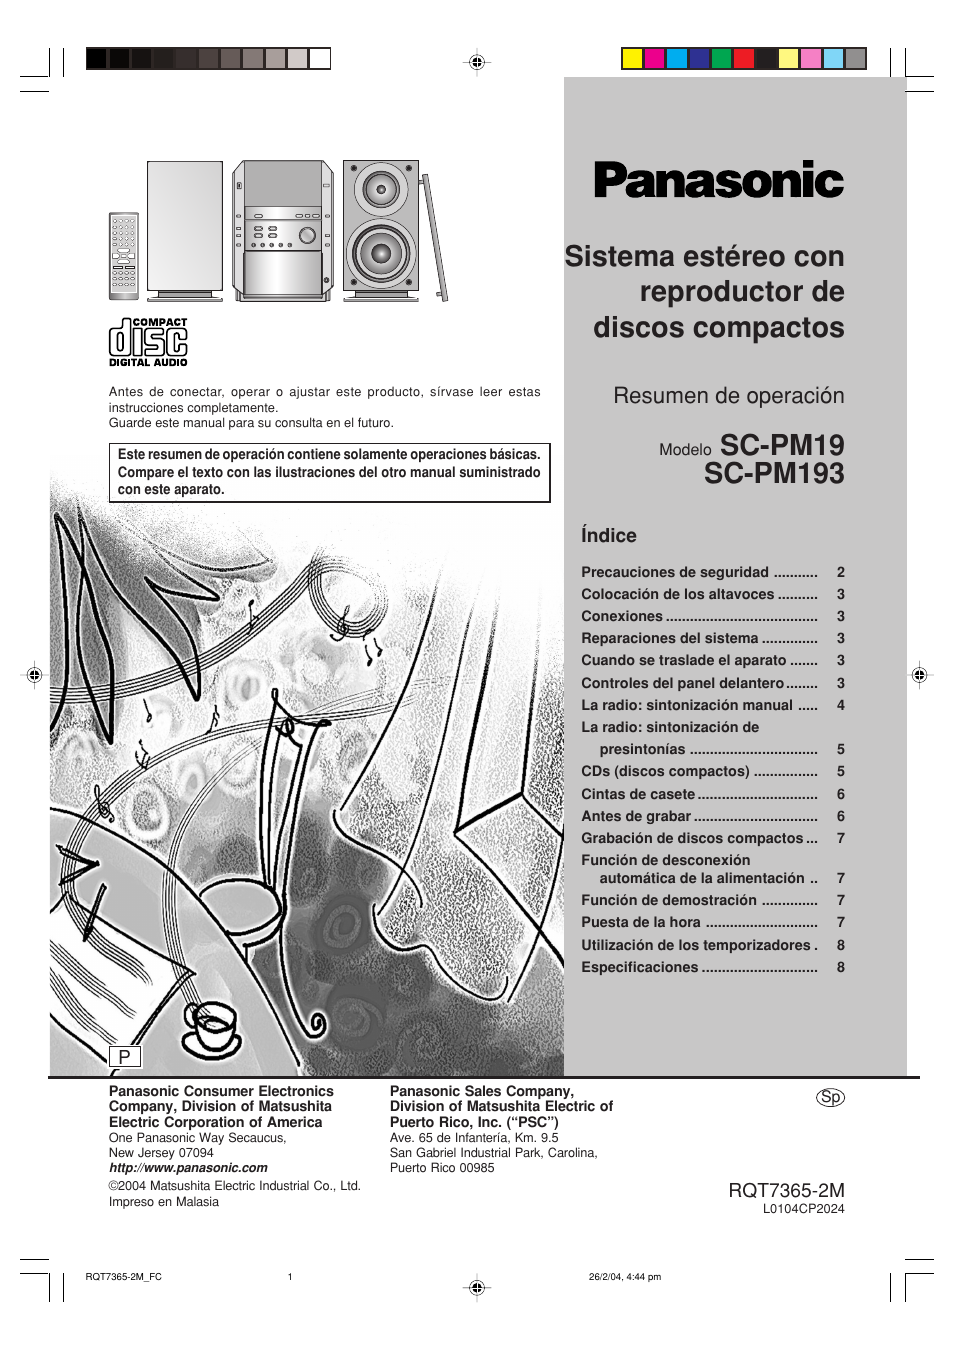 Panasonic SCPM19 Manual del usuario | Páginas: 8